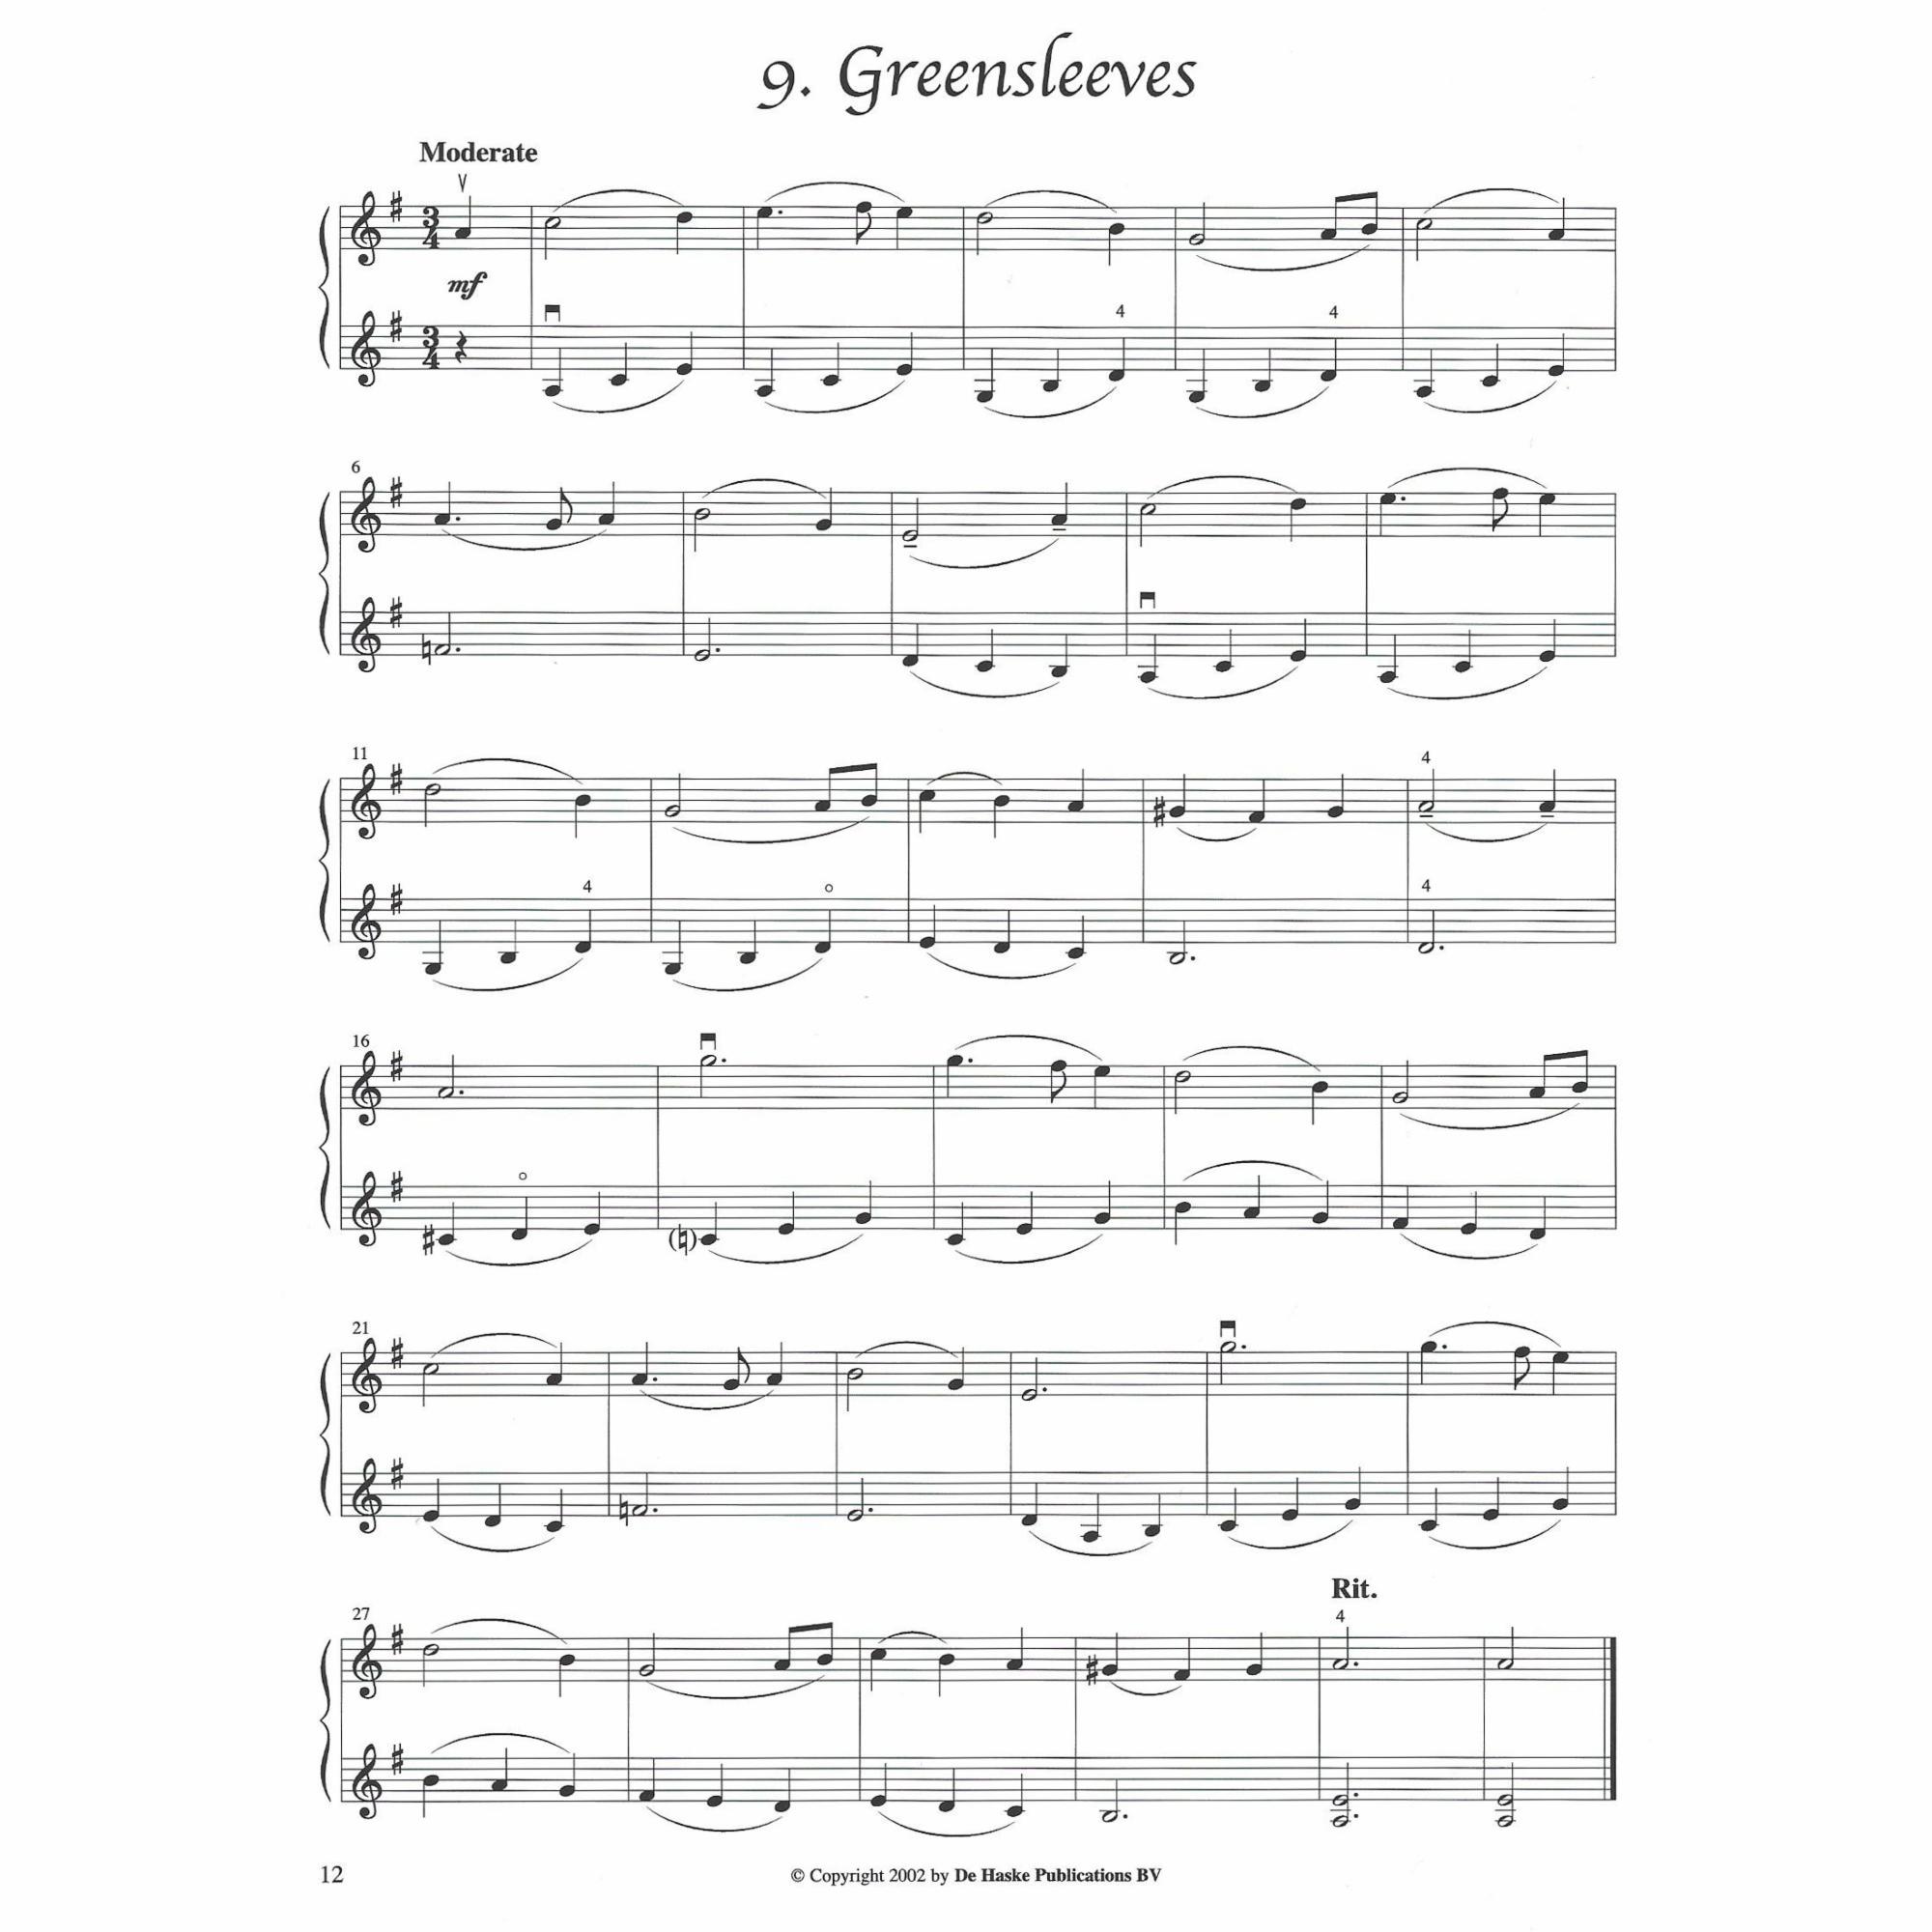 Sample: Violins Part (Pg. 12)